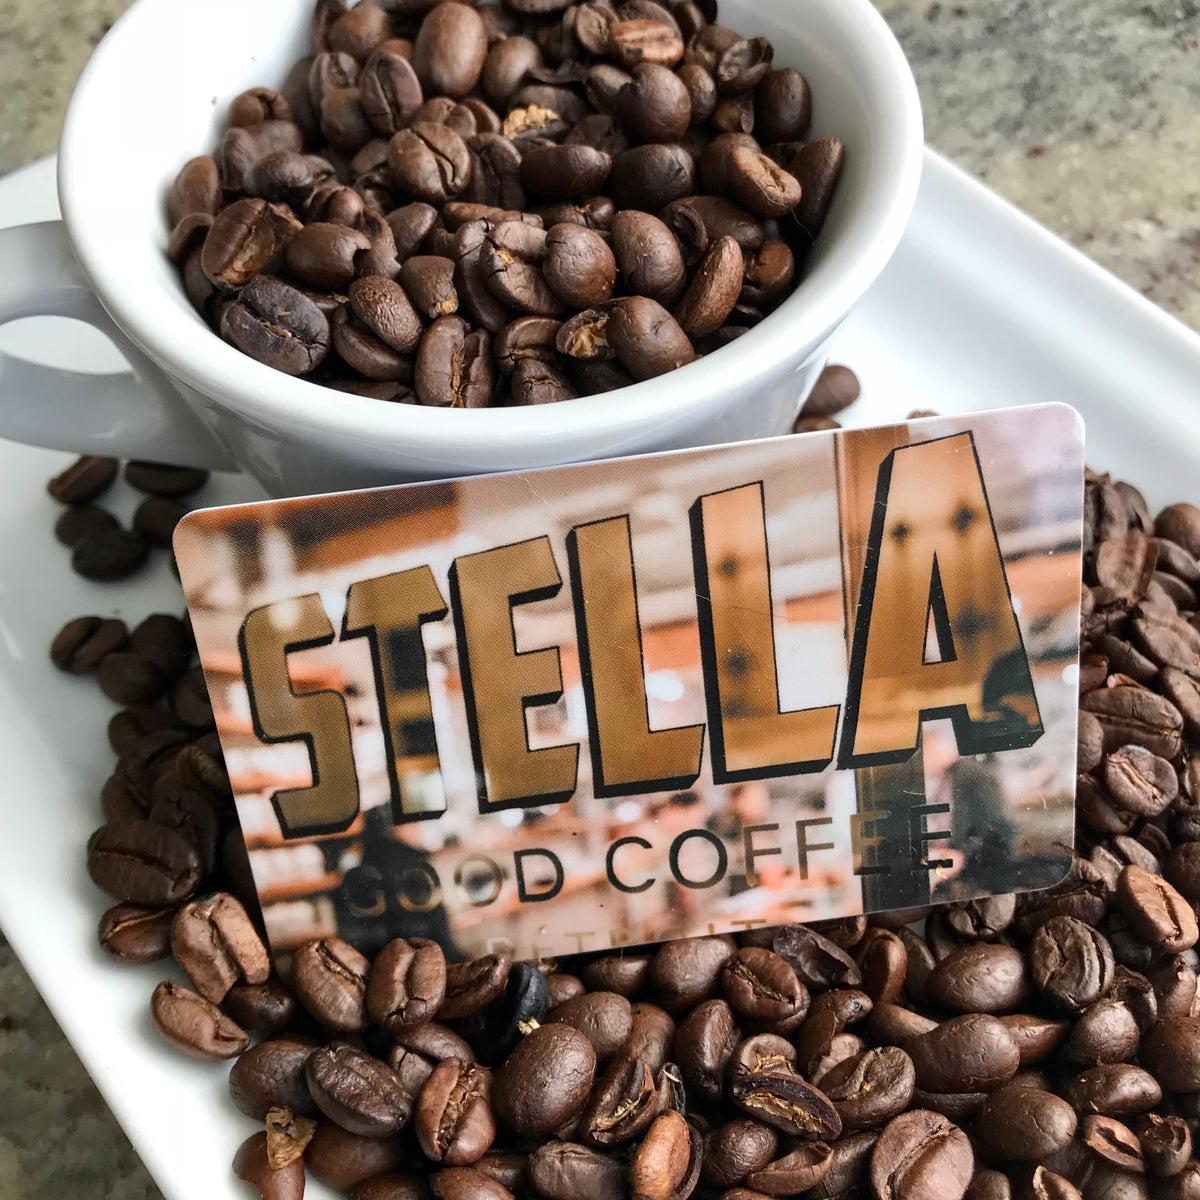 Stella Good Coffee Gift Card - $25    